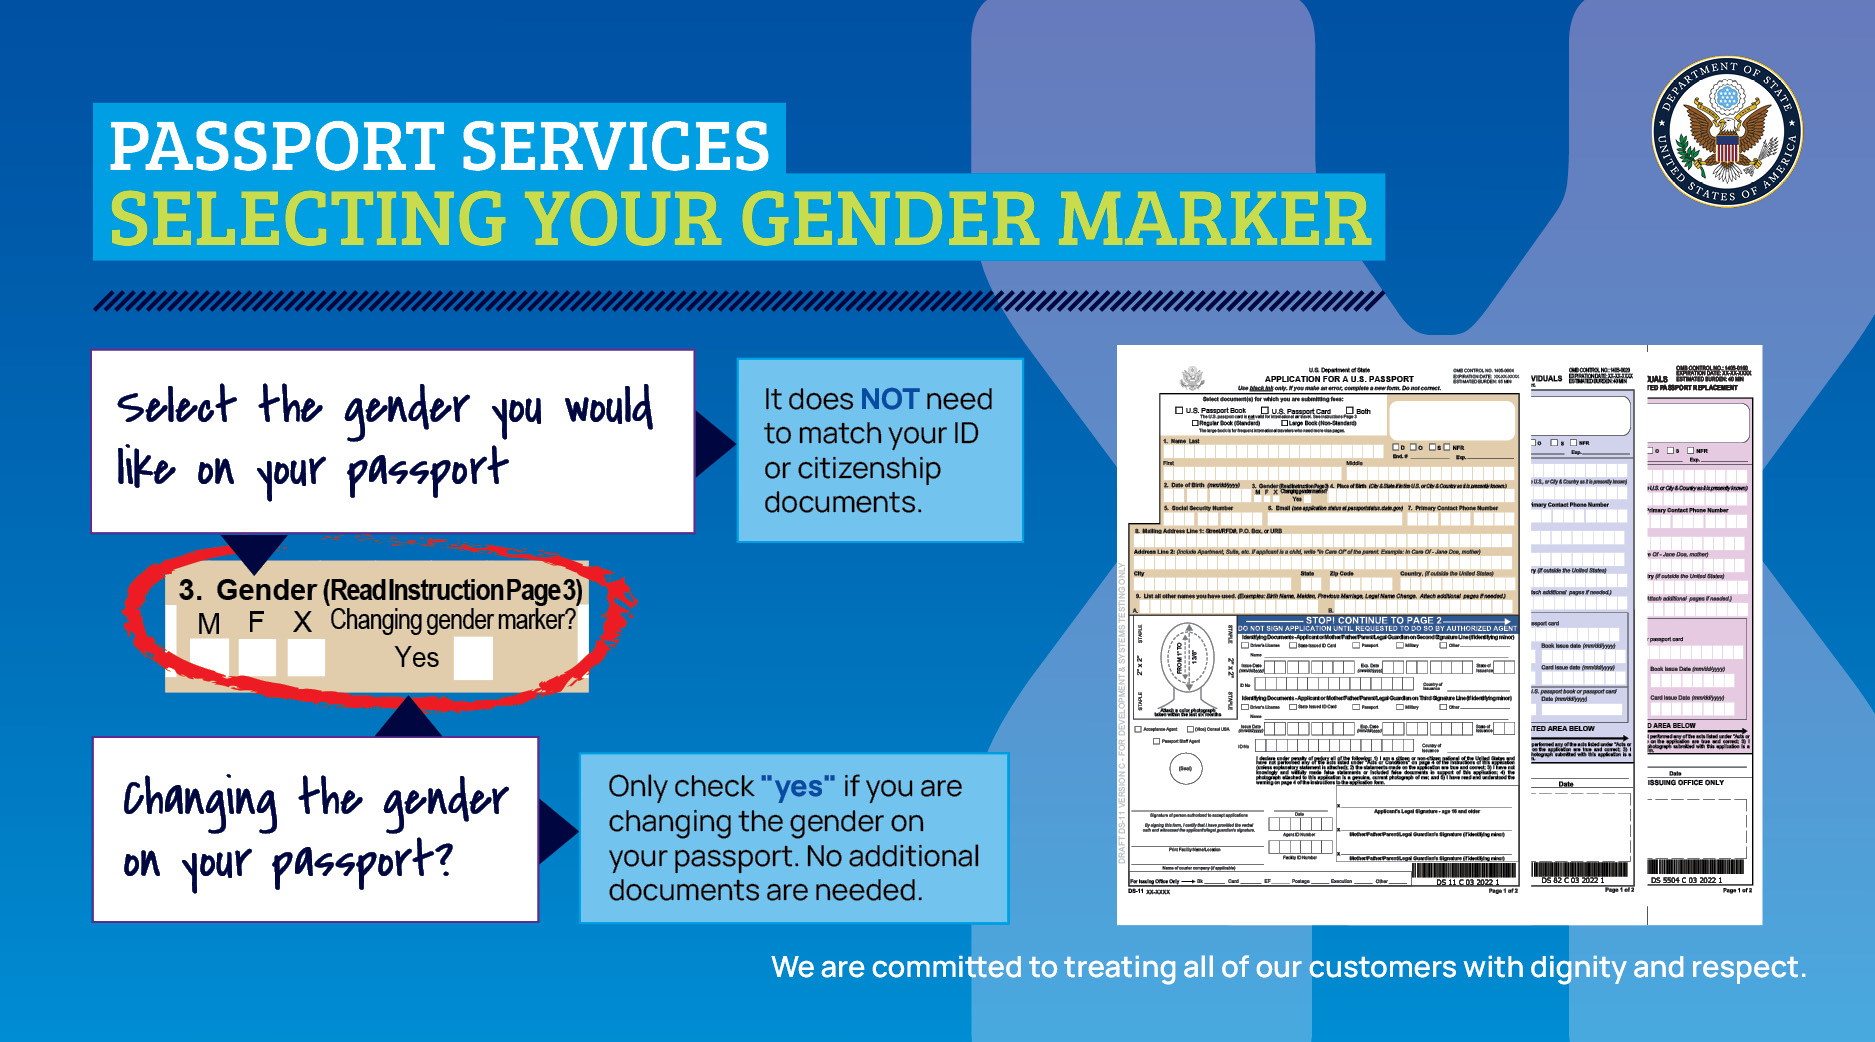 X Gender Marker for Passport Forms